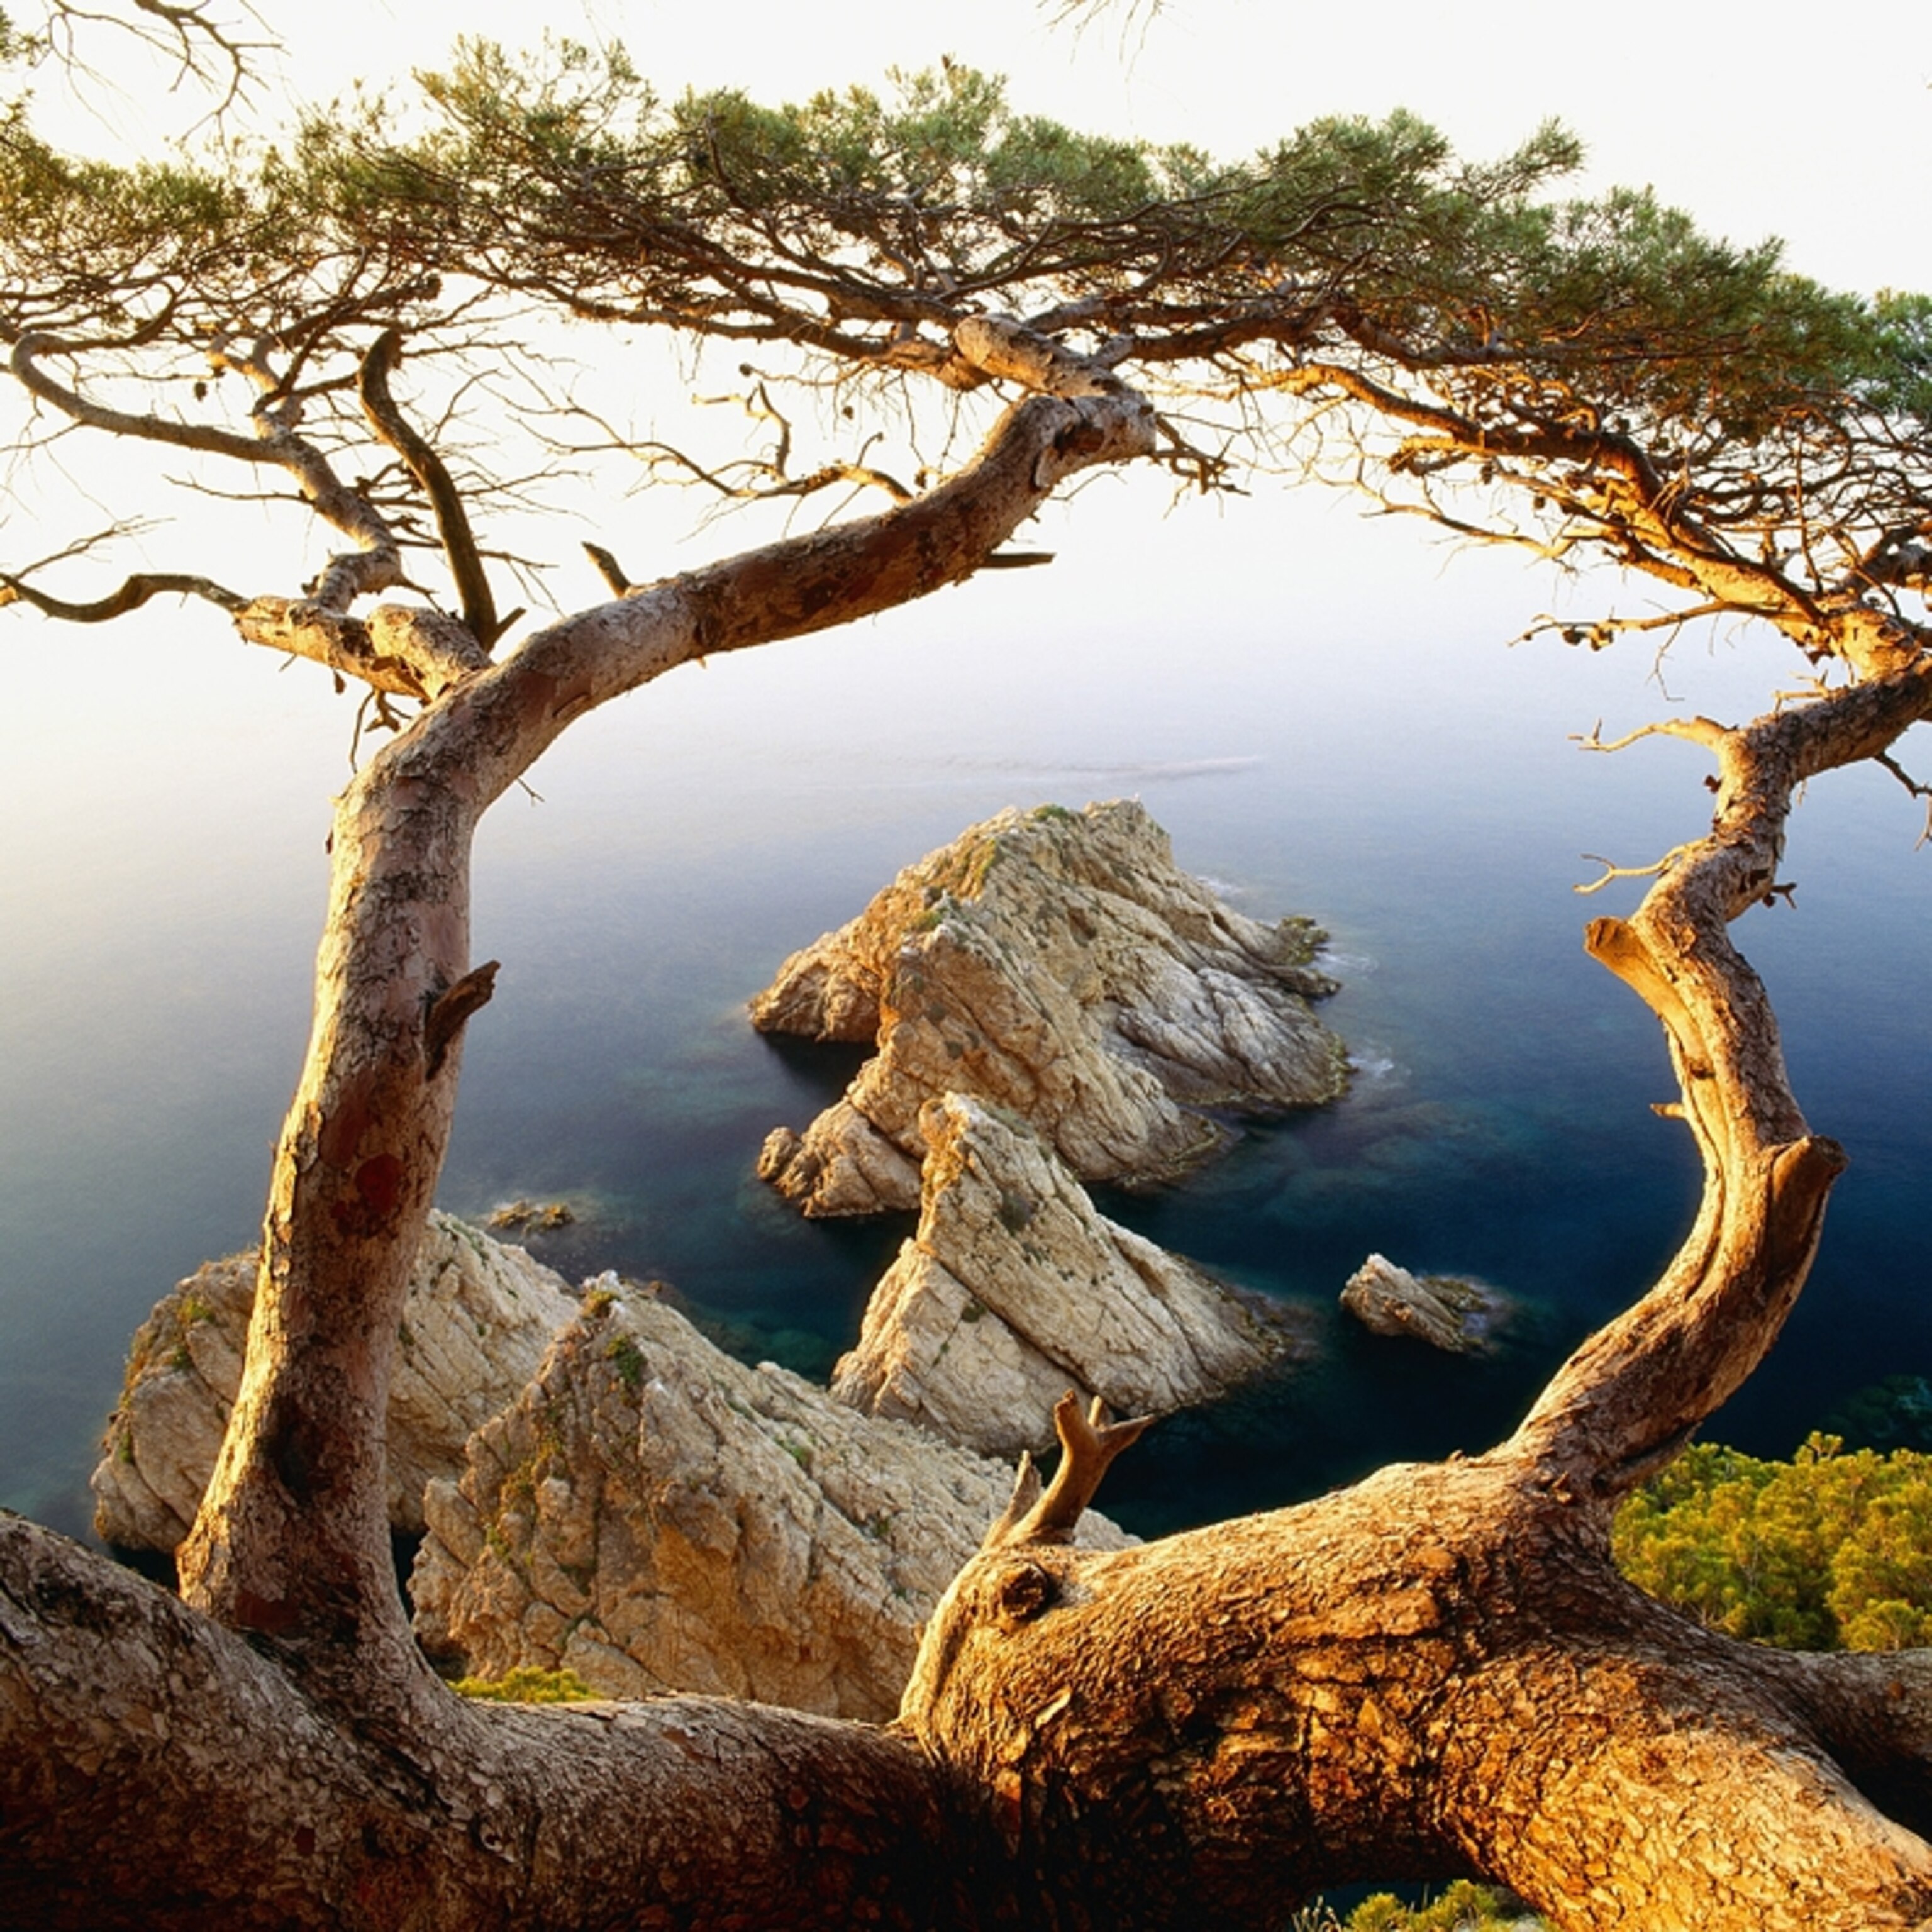 Costa Brava Photo: Best of the World - National Geographic